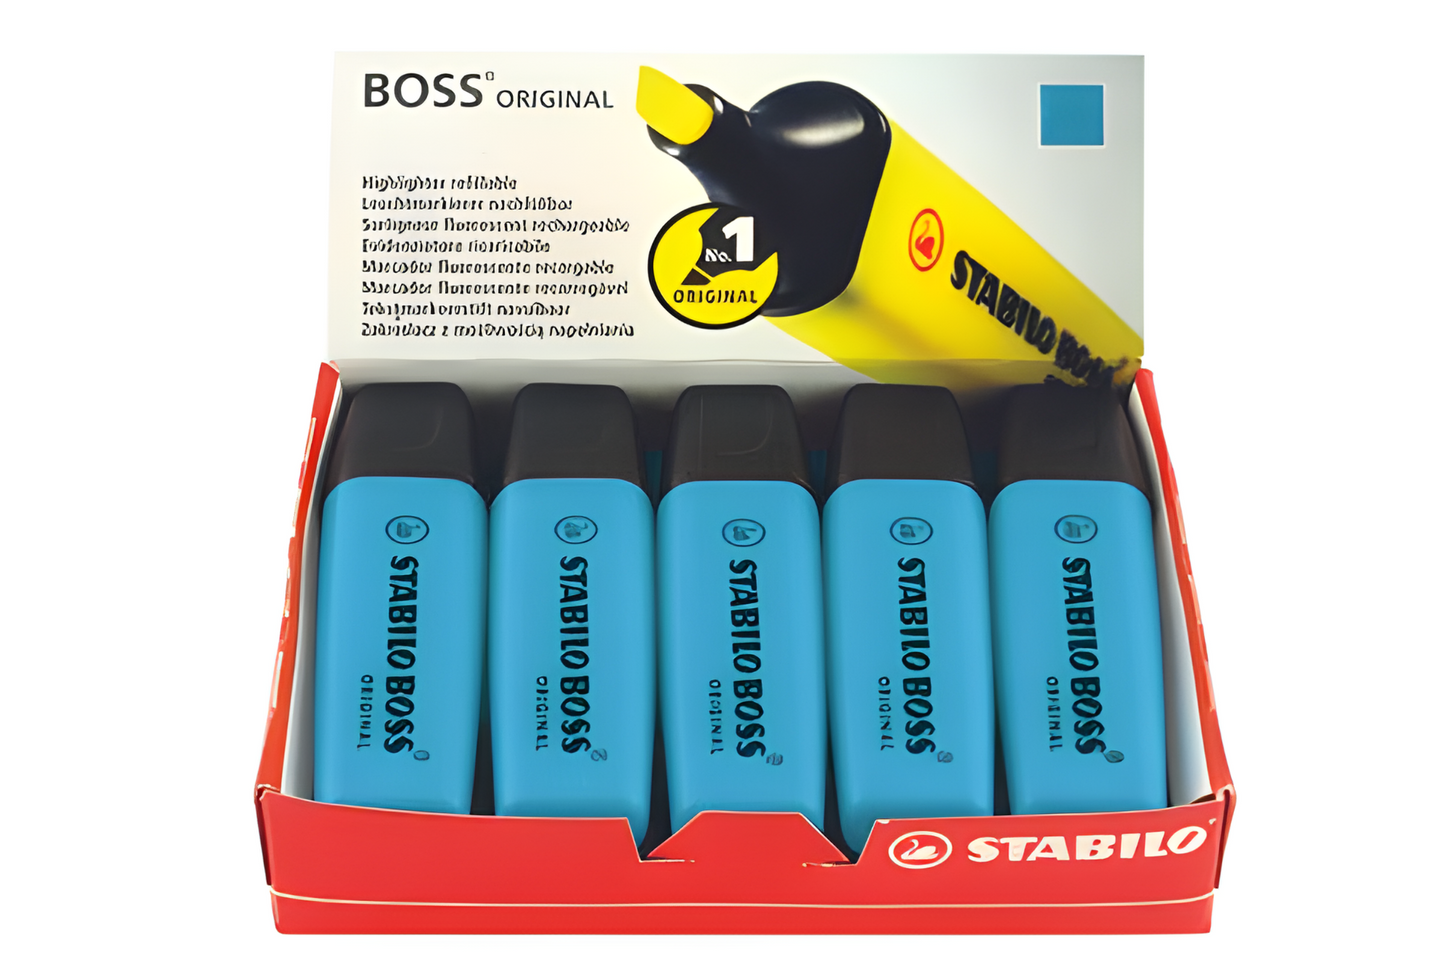 Stabilo Boss Original Highlighter | 10pcs